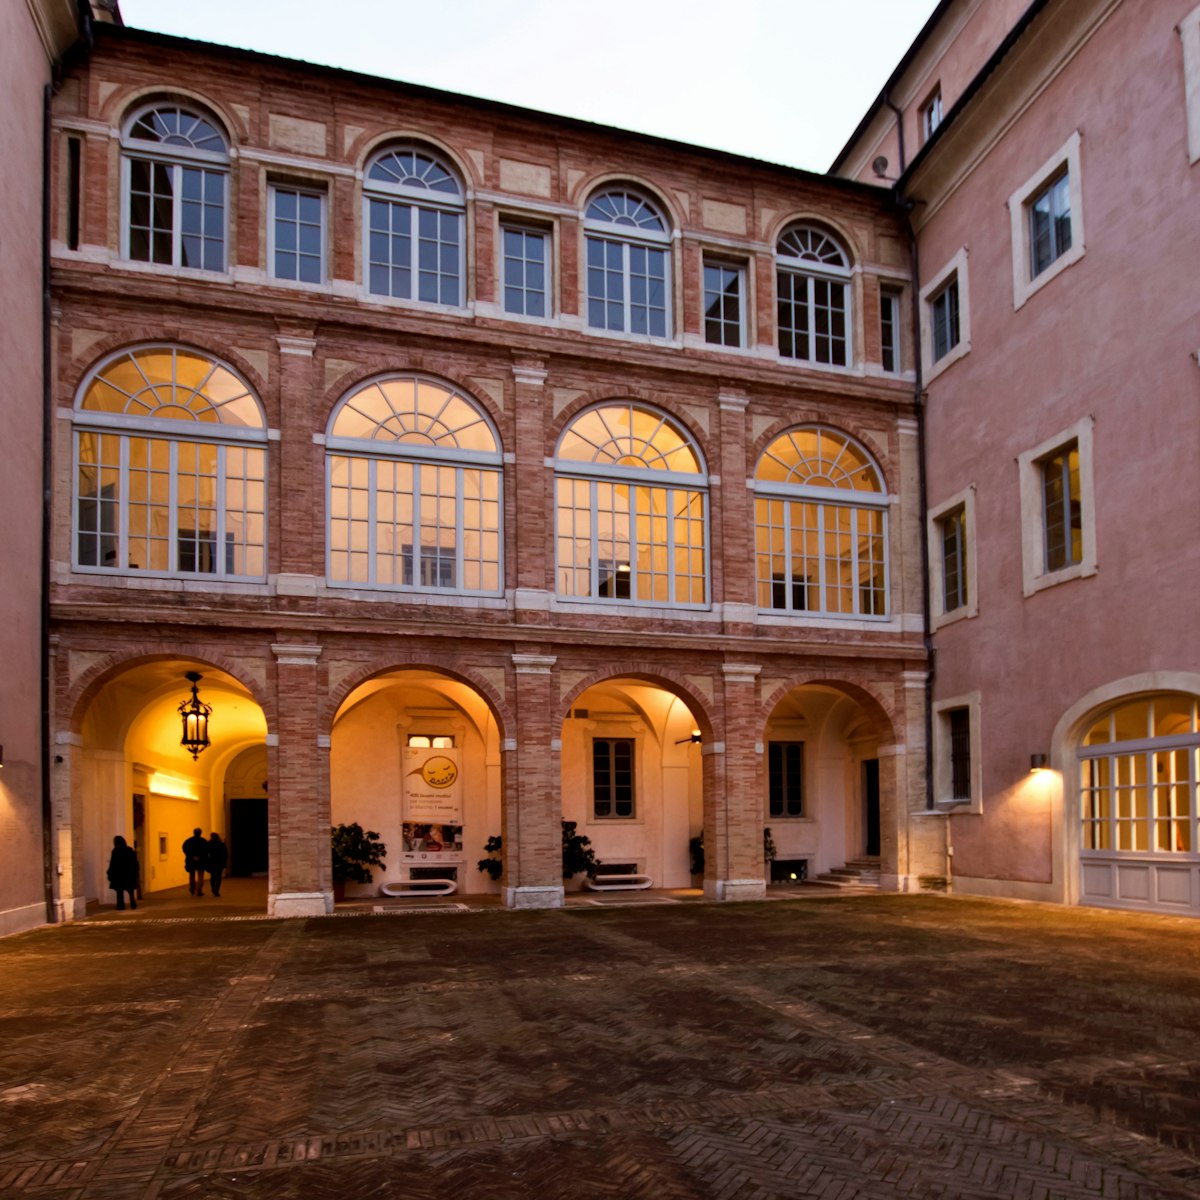 Courtyard Buonaccorsi Palace Macerata Marche Italy Europe. (Photo by: MauroFlamini/REDA&CO/Universal Images Group via Getty Images)